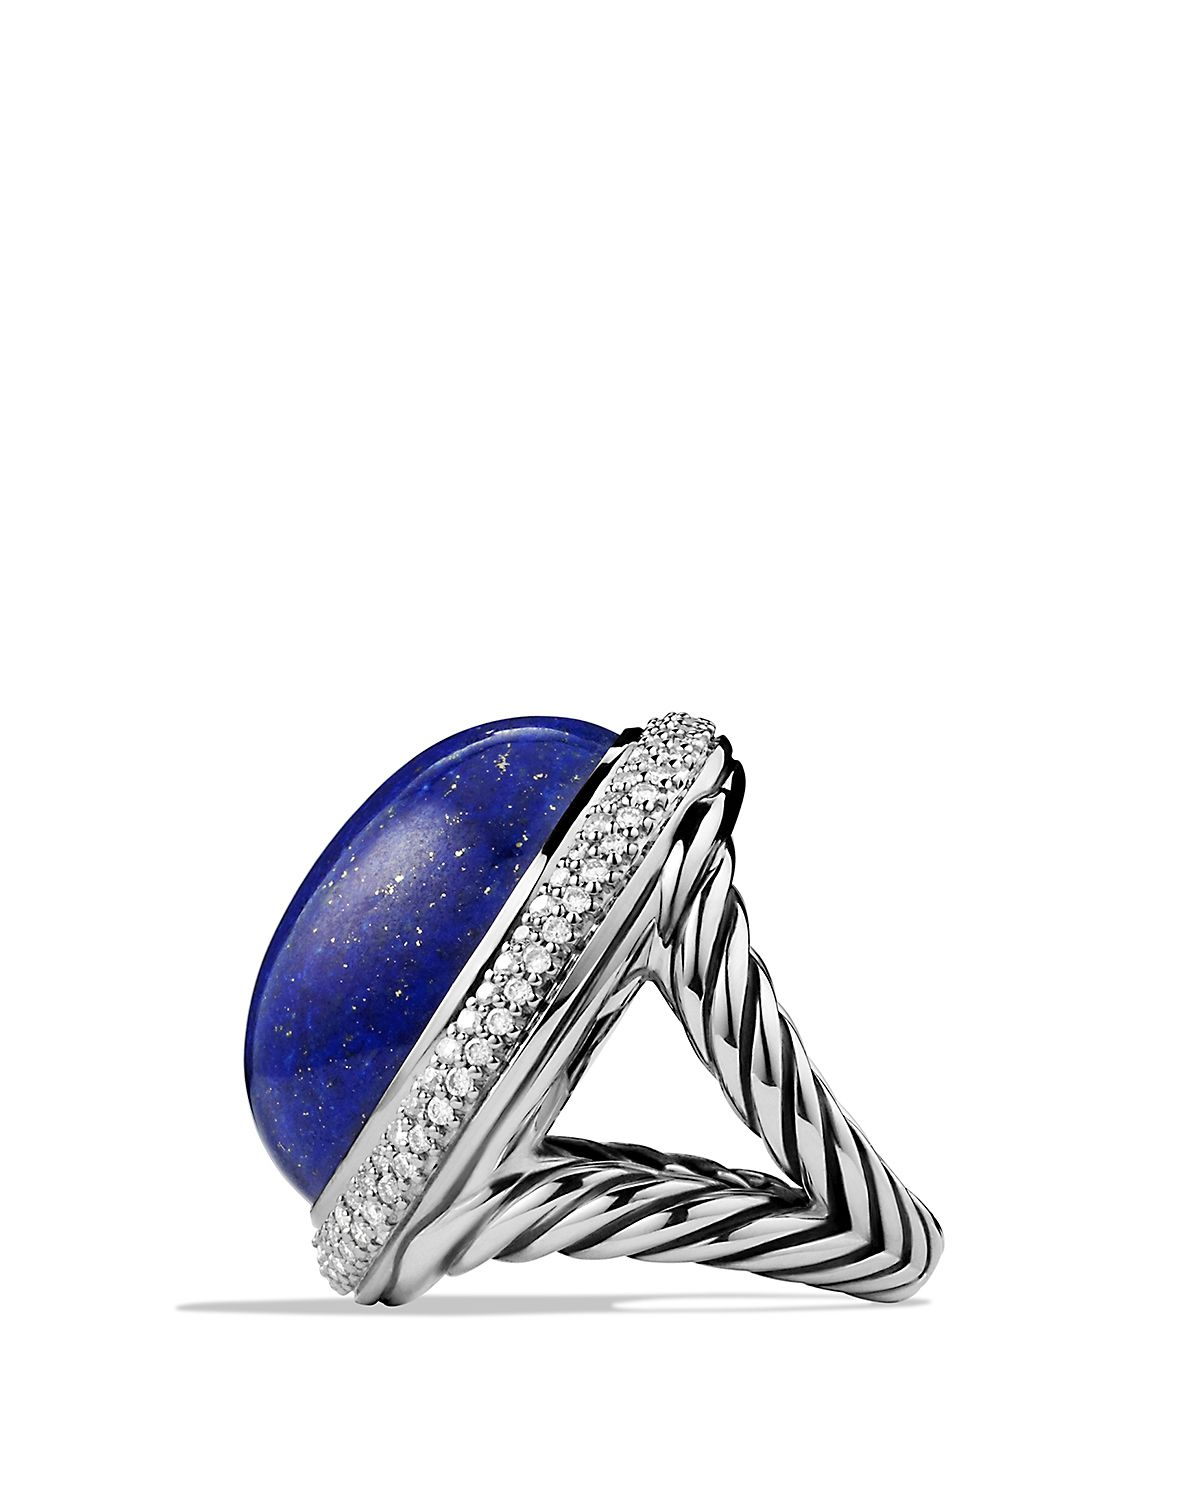 Jewelryonclick Genuine Lapis Lazuli 925 Silver Vintage Ring Handmade Fashion in Size 4,5,6,7,8,9,10,11,12 